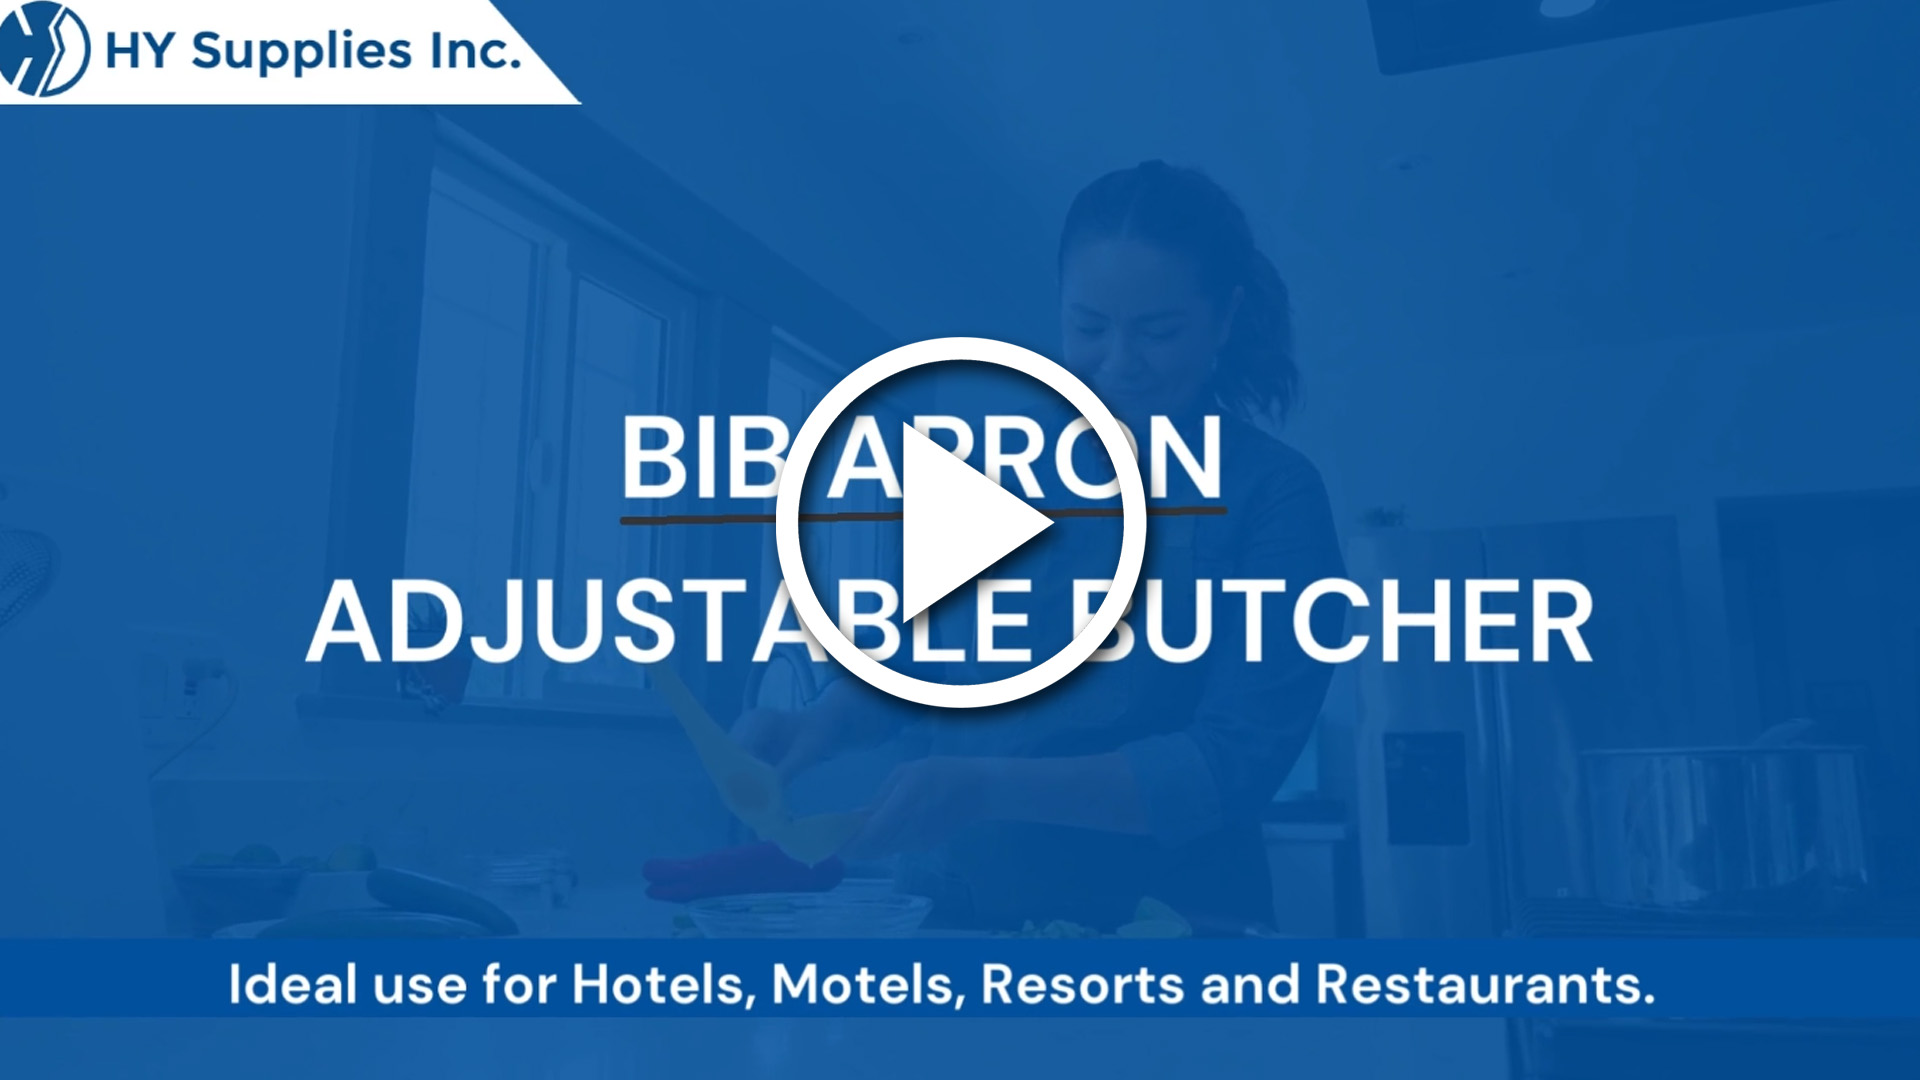 Bib Apron - Adjustable Butcher